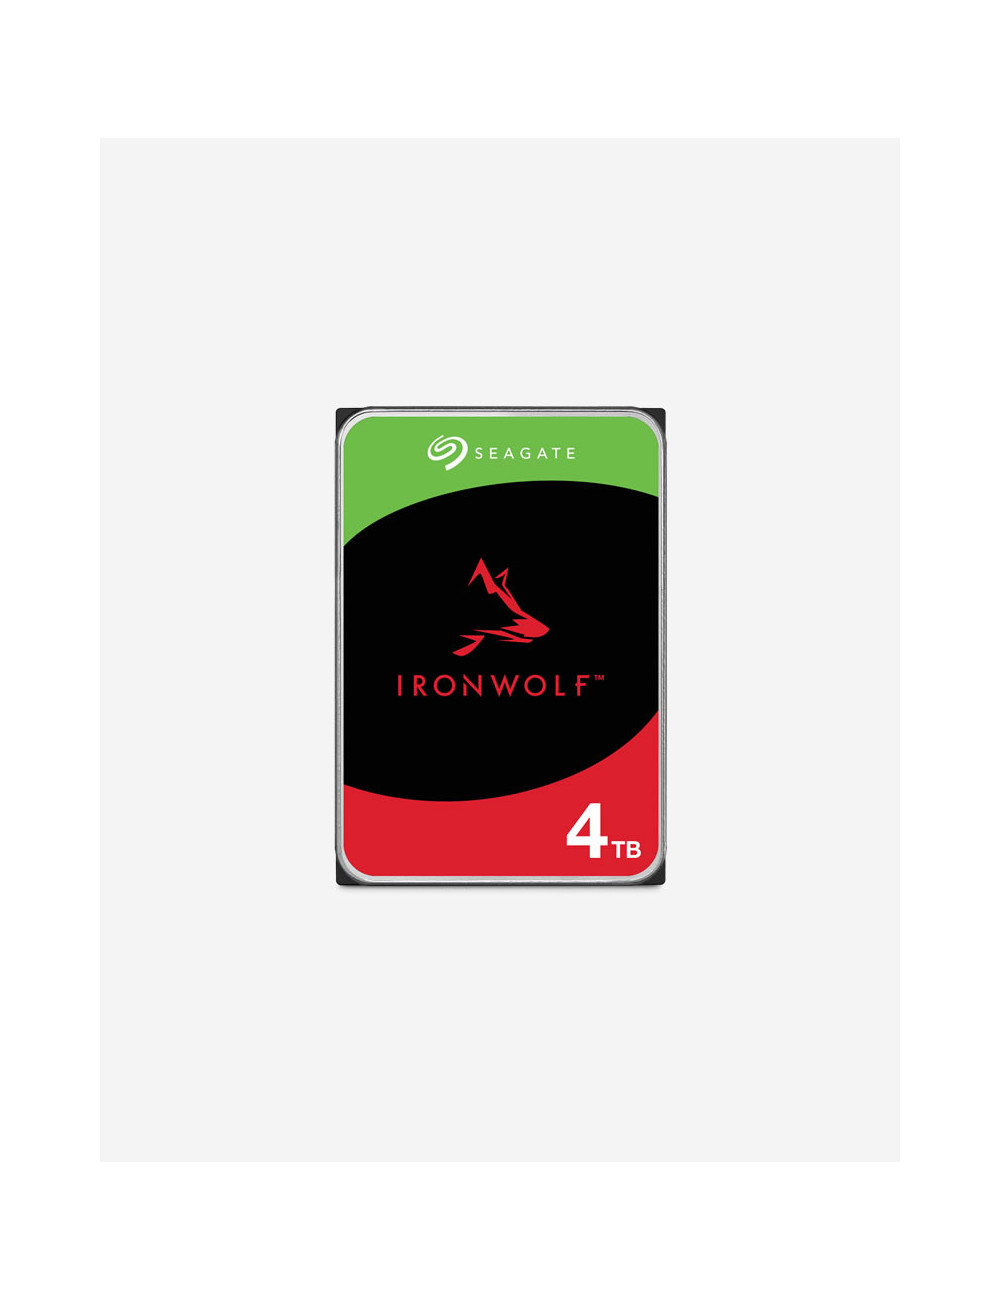 Seagate IRONWOLF 4TB Hard Drive HDD 3.5"